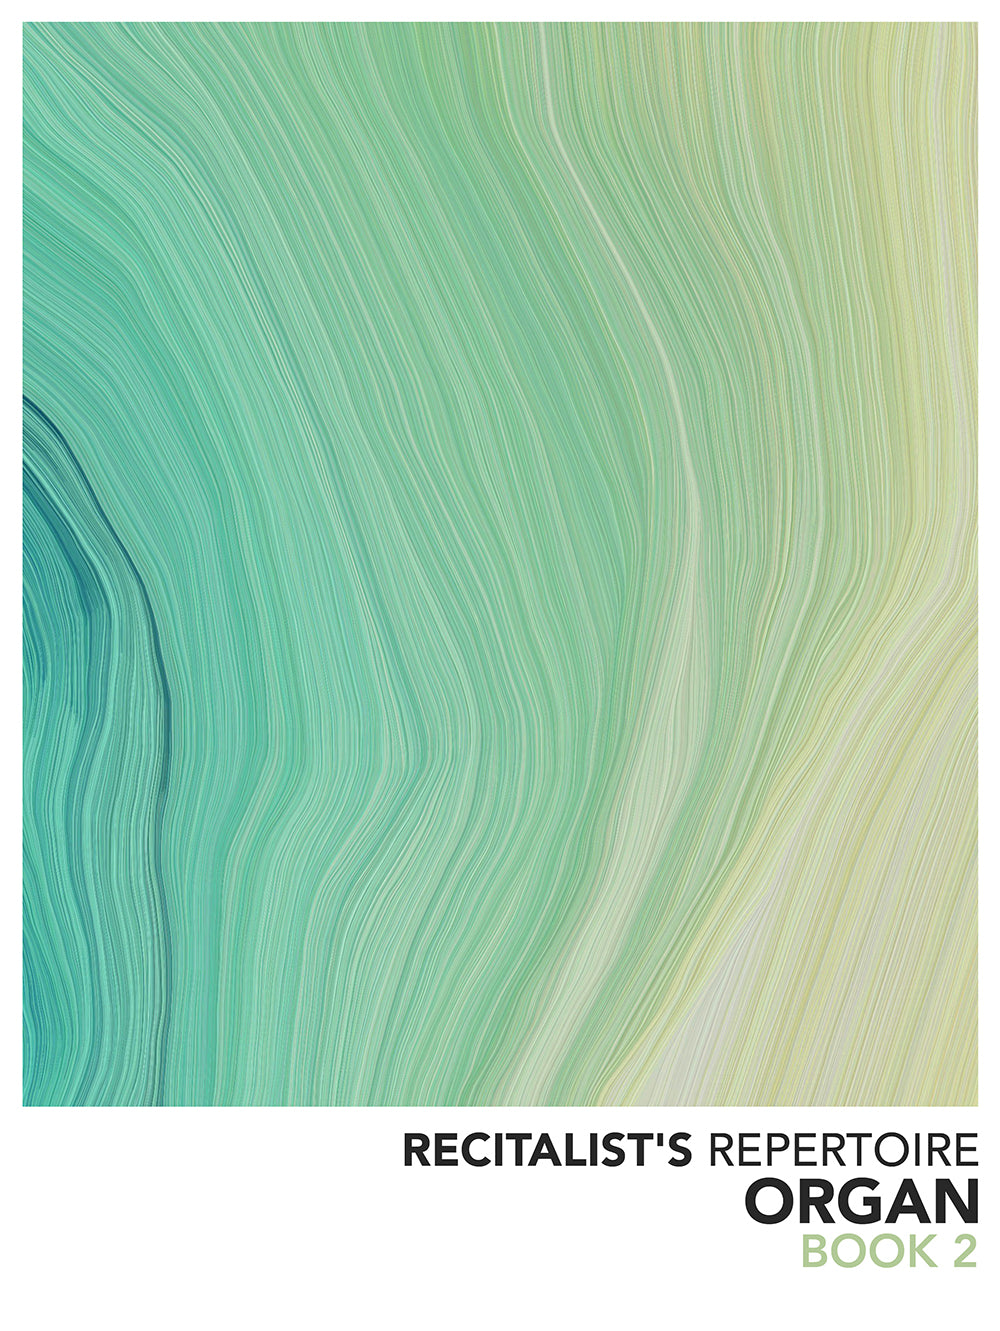 Recitalist's Repertoire Organ Book 2